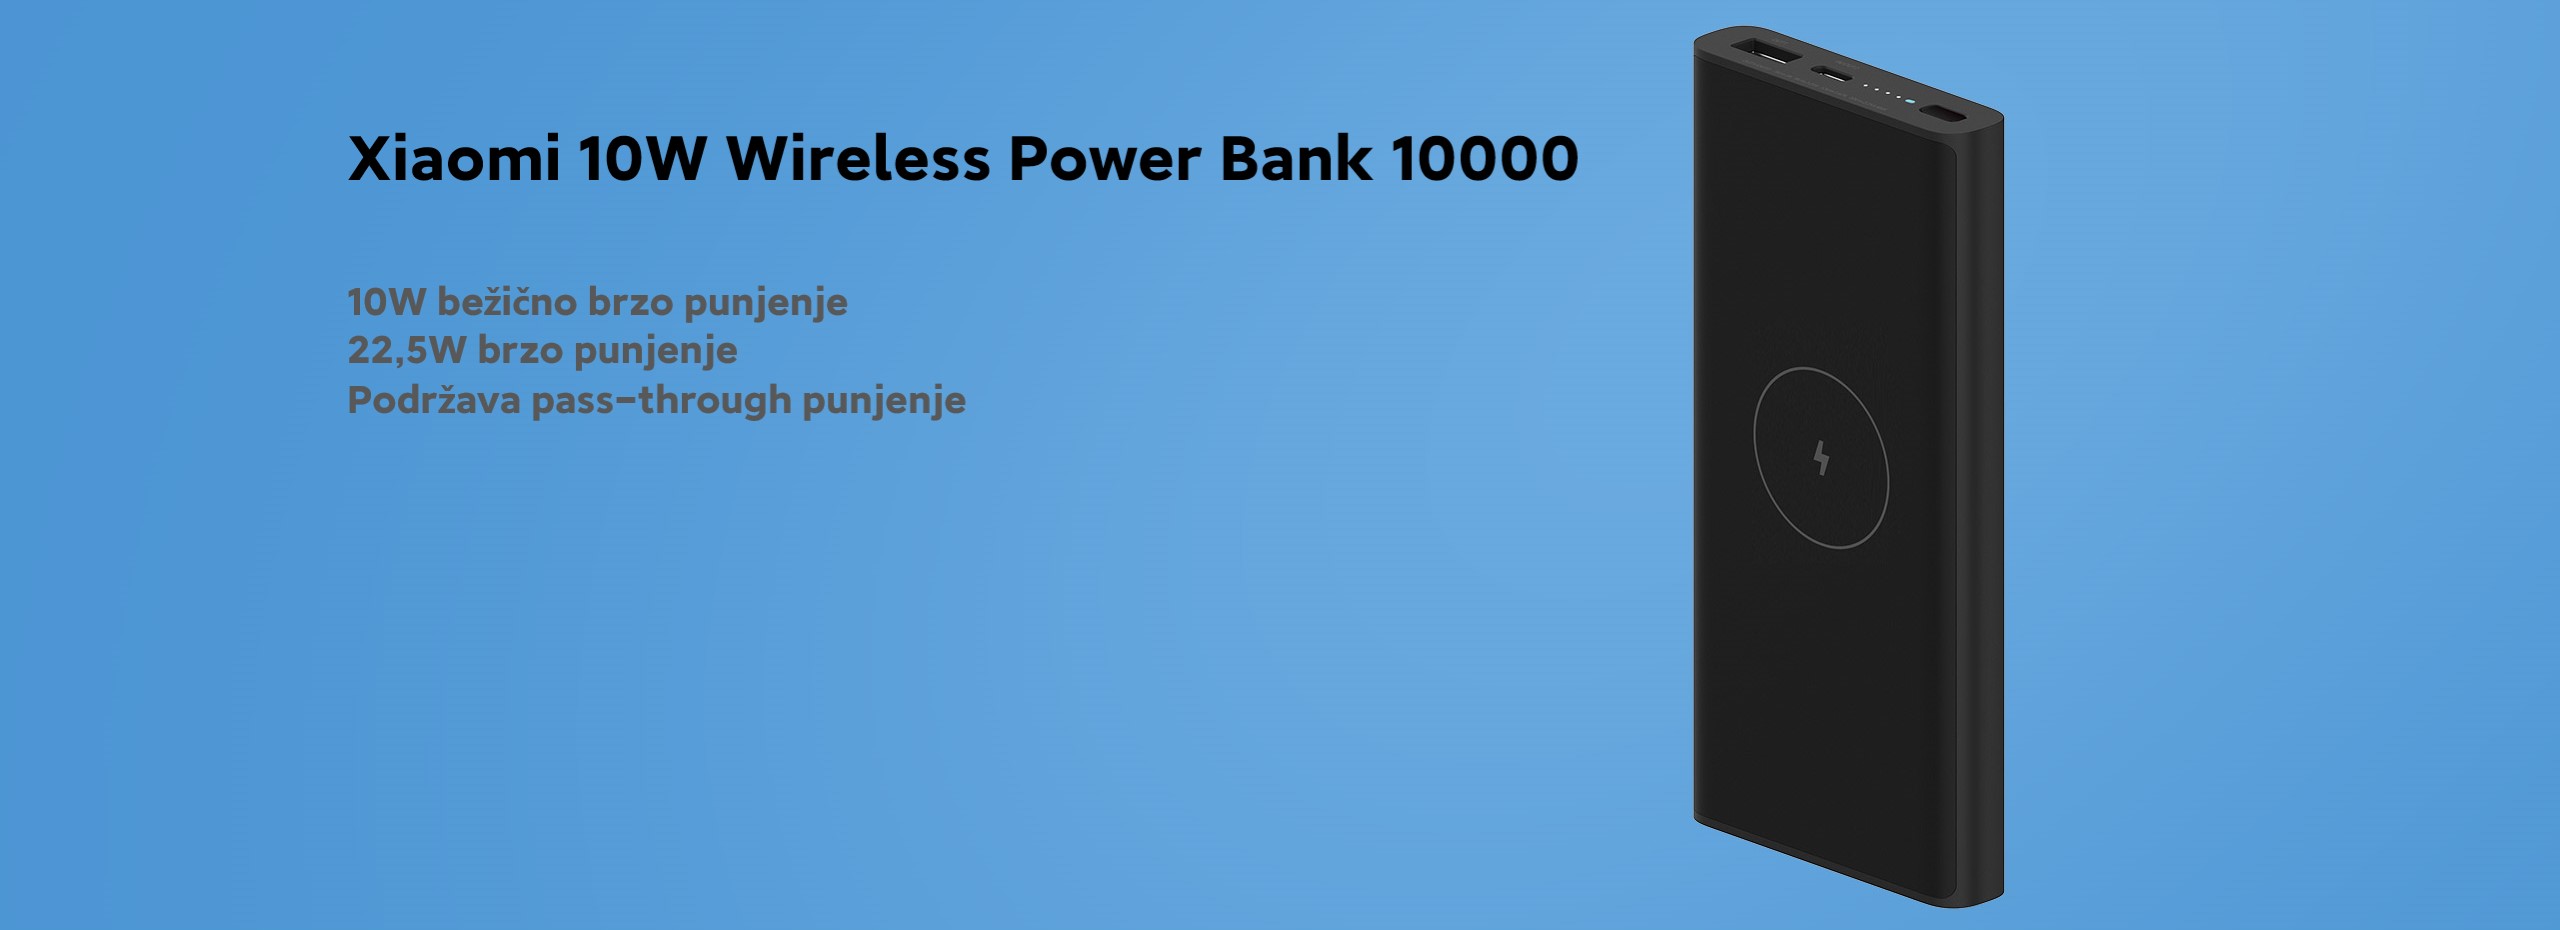 Cargador Inalambrico Xiaomi 10w Wireless Powerbank 10000mah - ICBC Mall